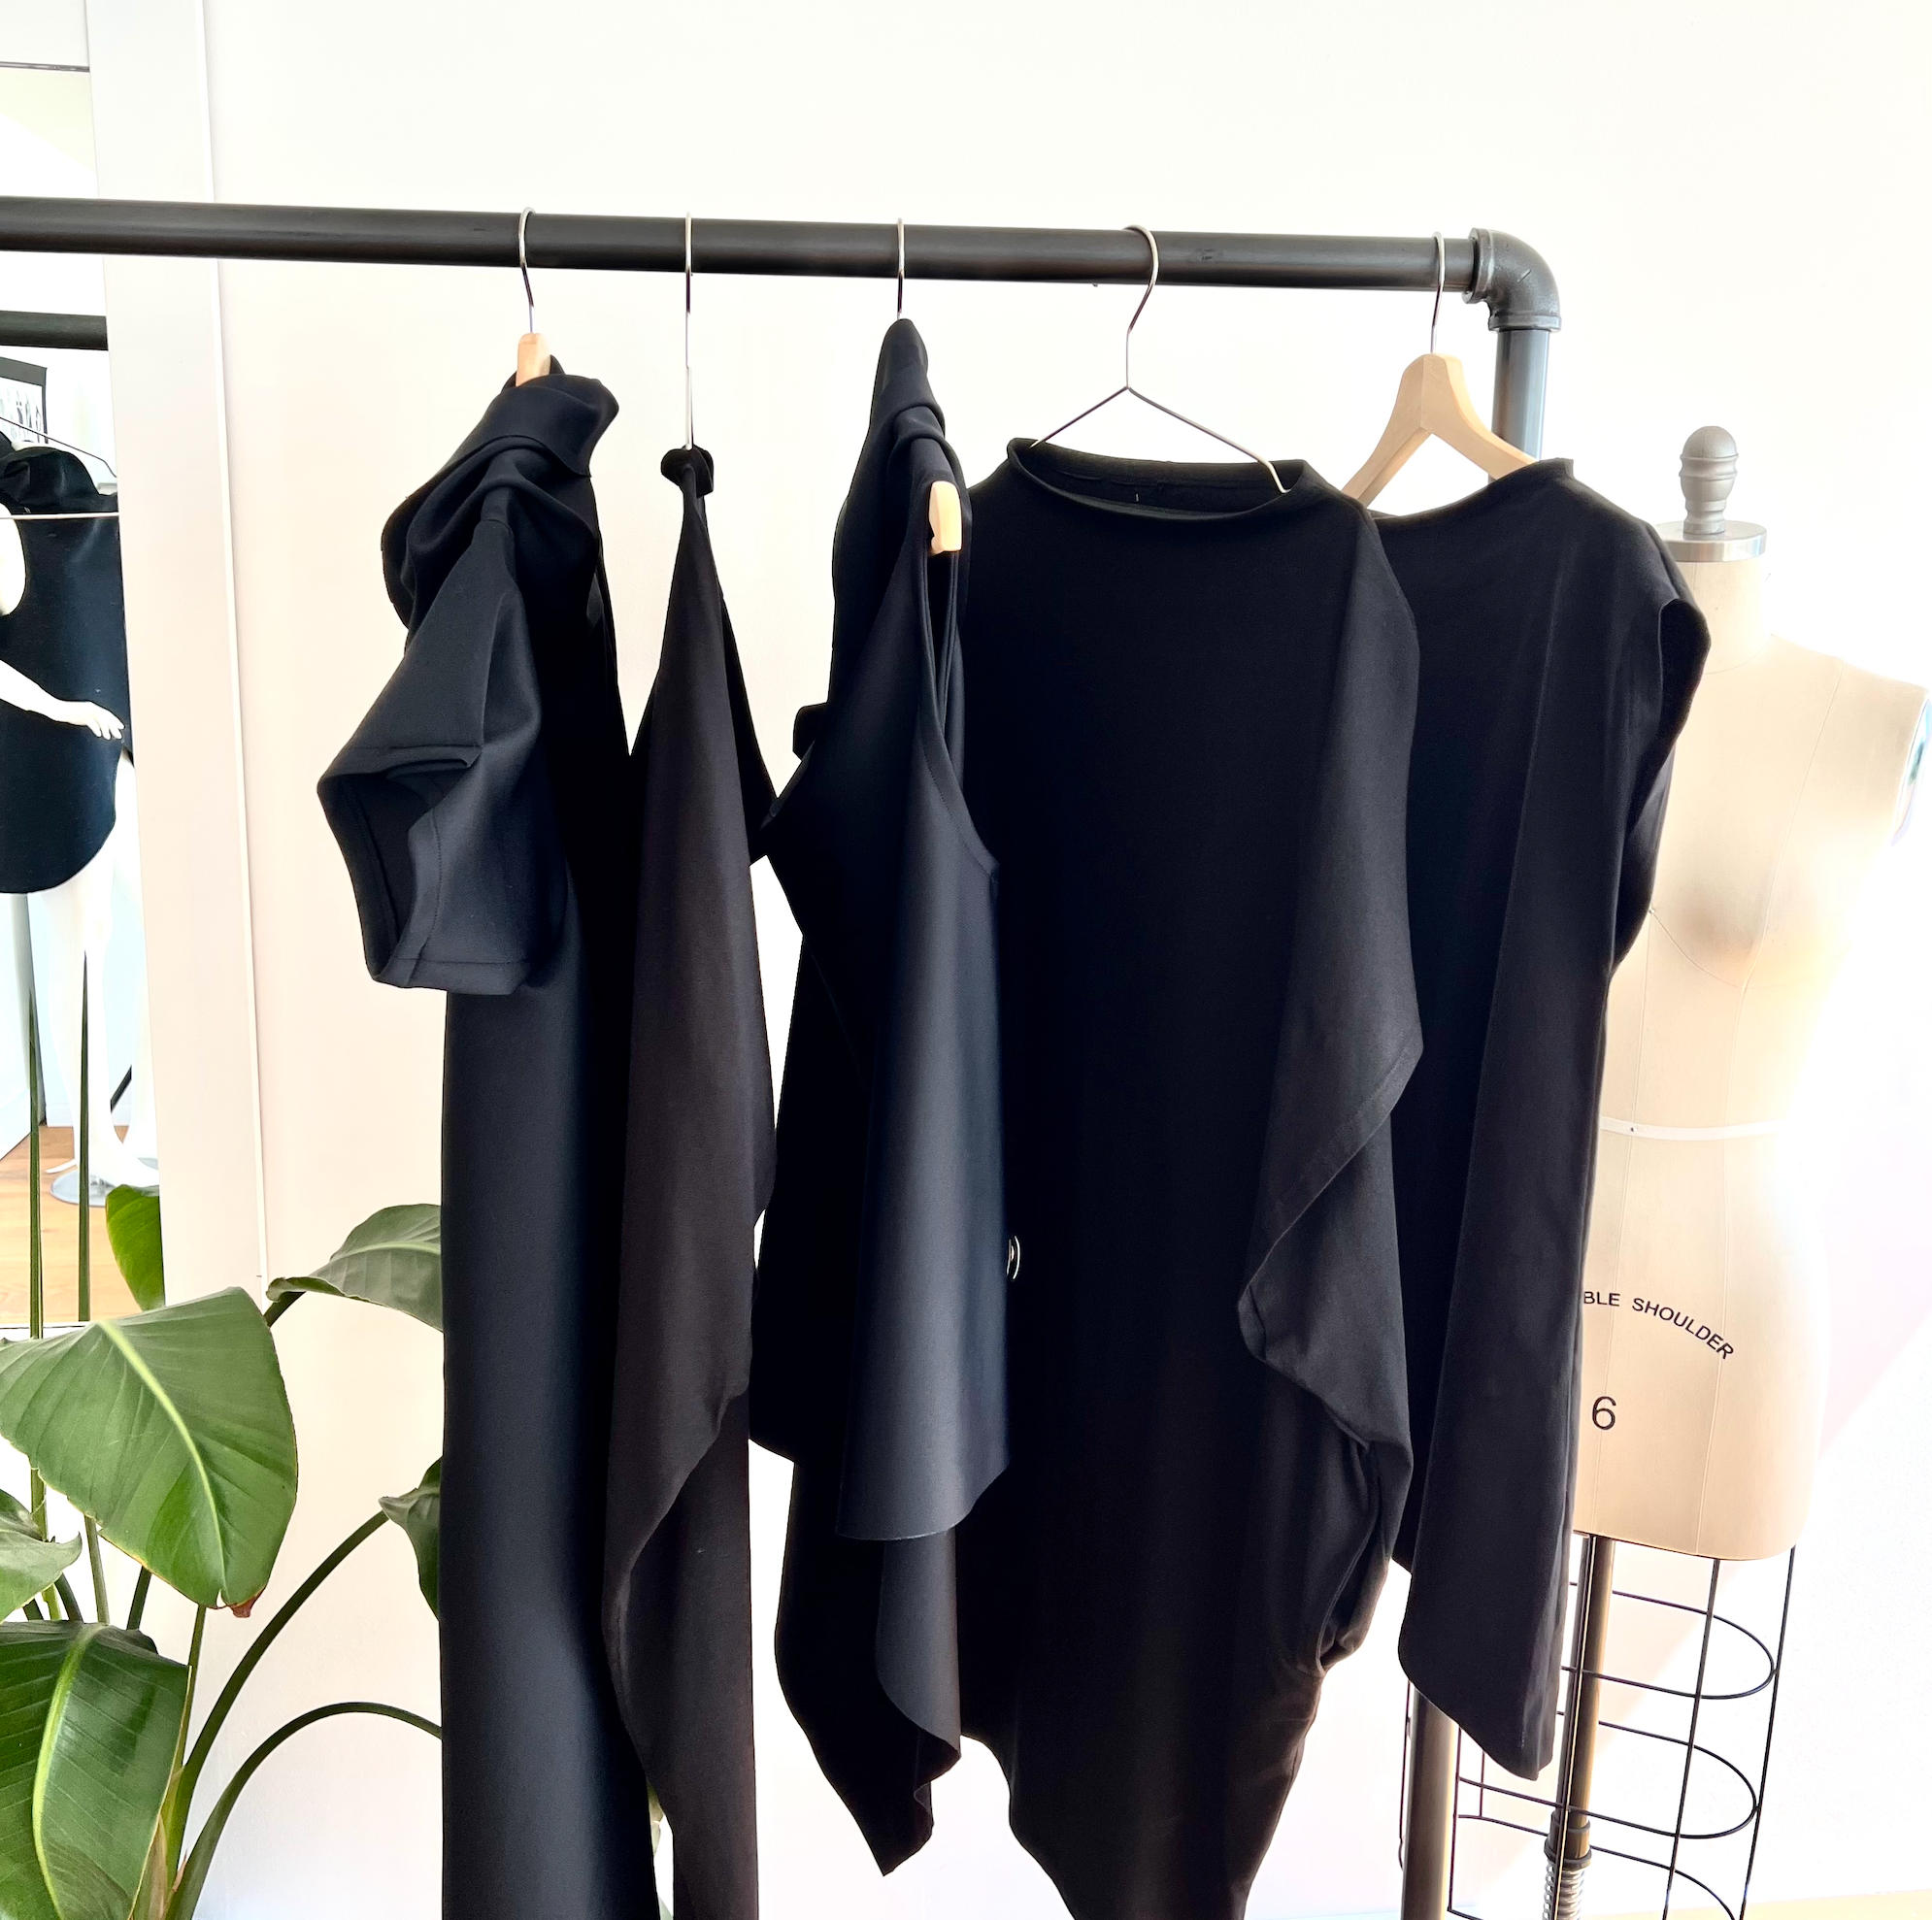 capsule collection of black shift dresses, asymmetrical tops and faux fur vest